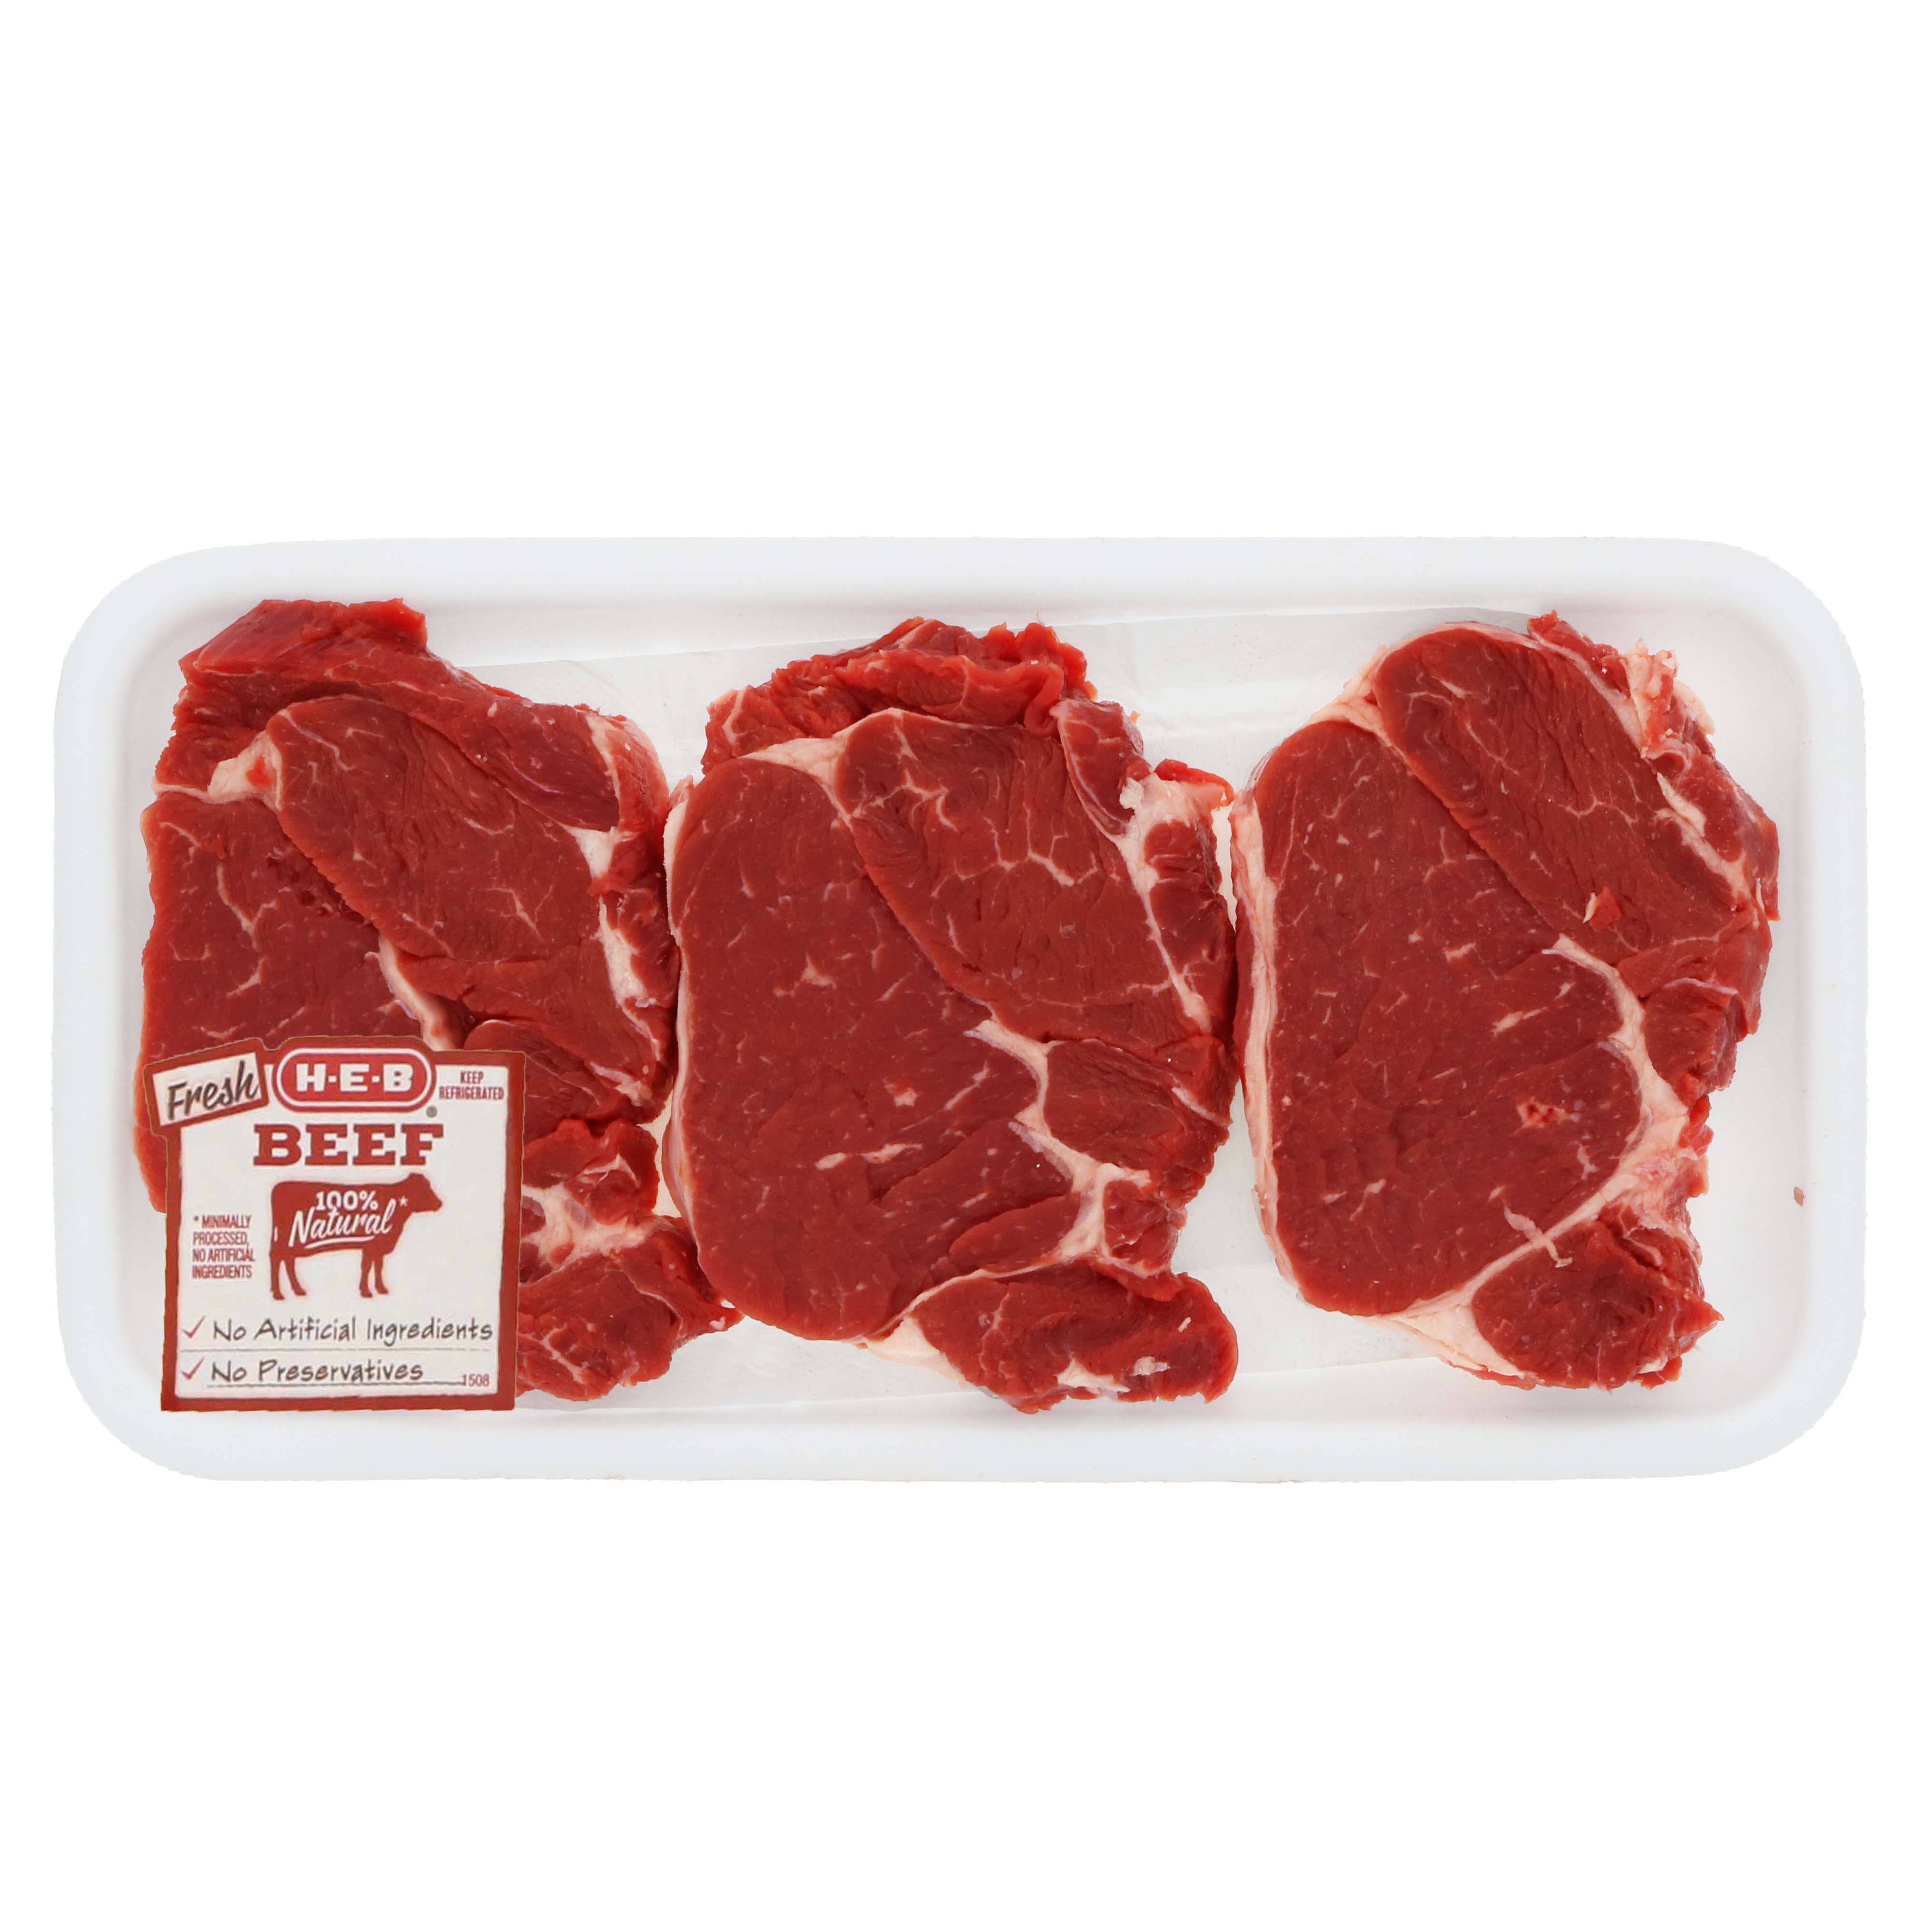 H-E-B Beef Chuck Eye Steak Boneless, USDA Select - Shop Beef at H-E-B